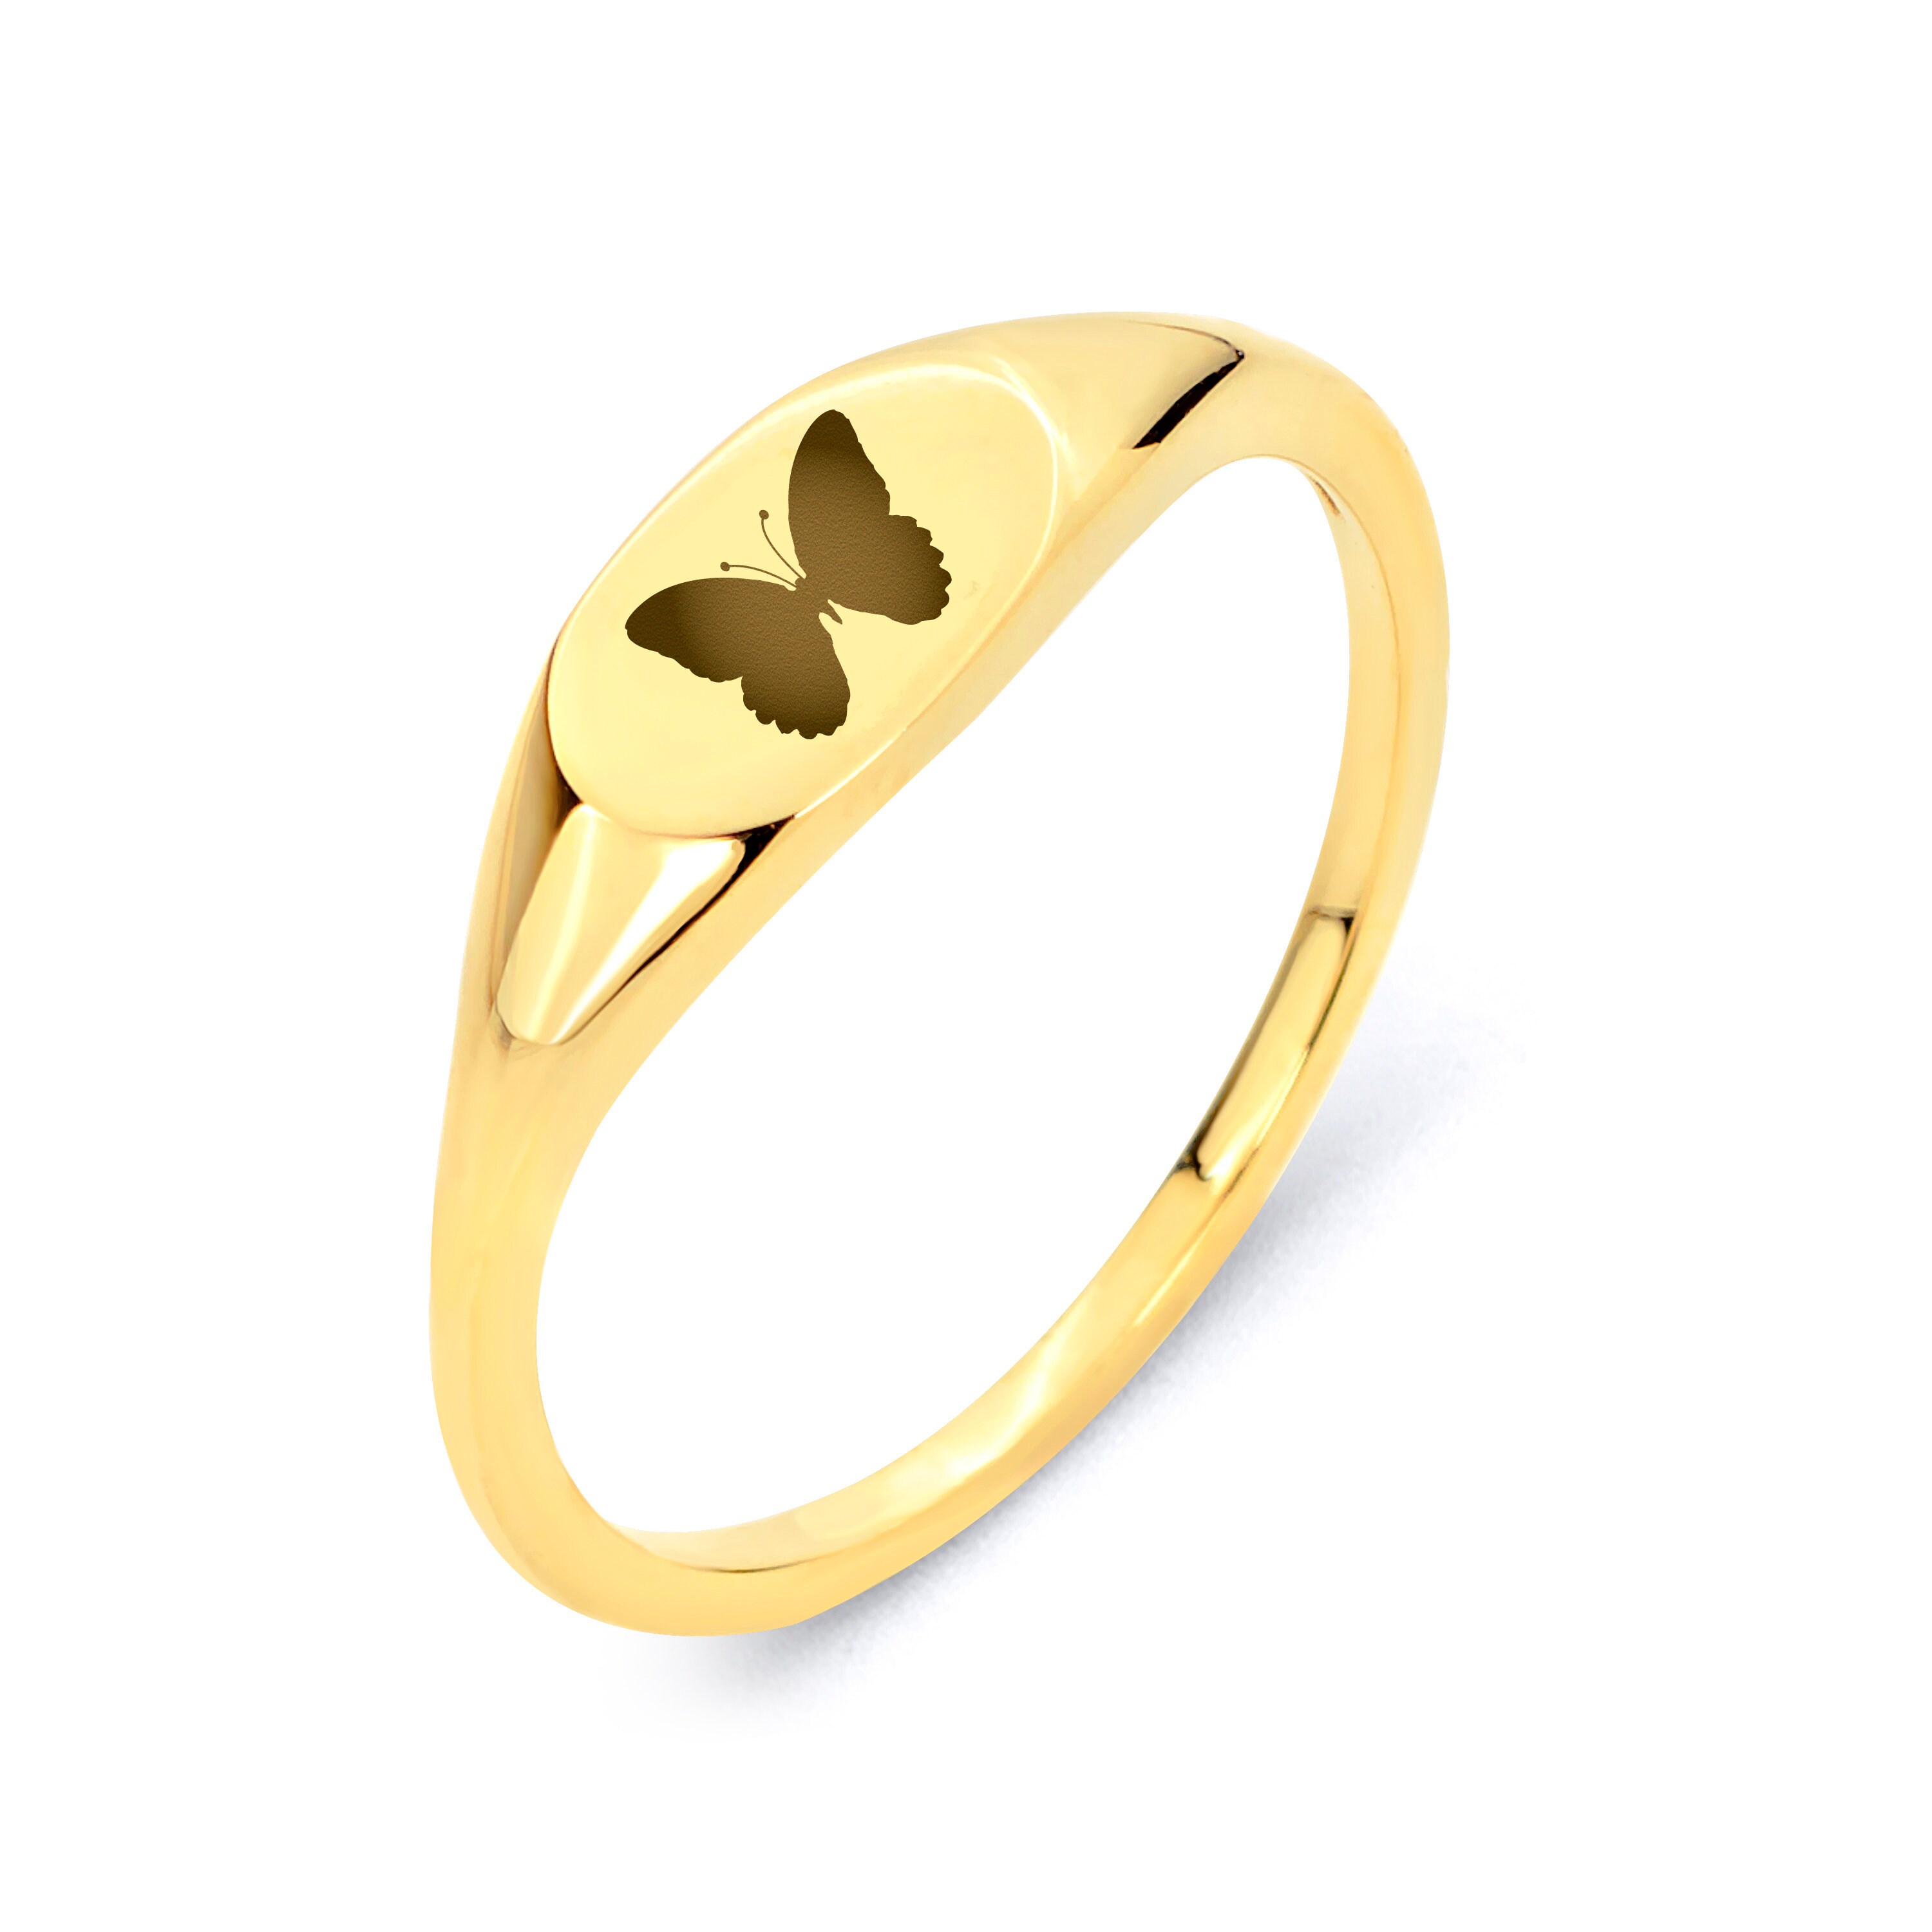 1/8 CT TW Diamond Butterfly Ring in 10k White Gold - CBG000261